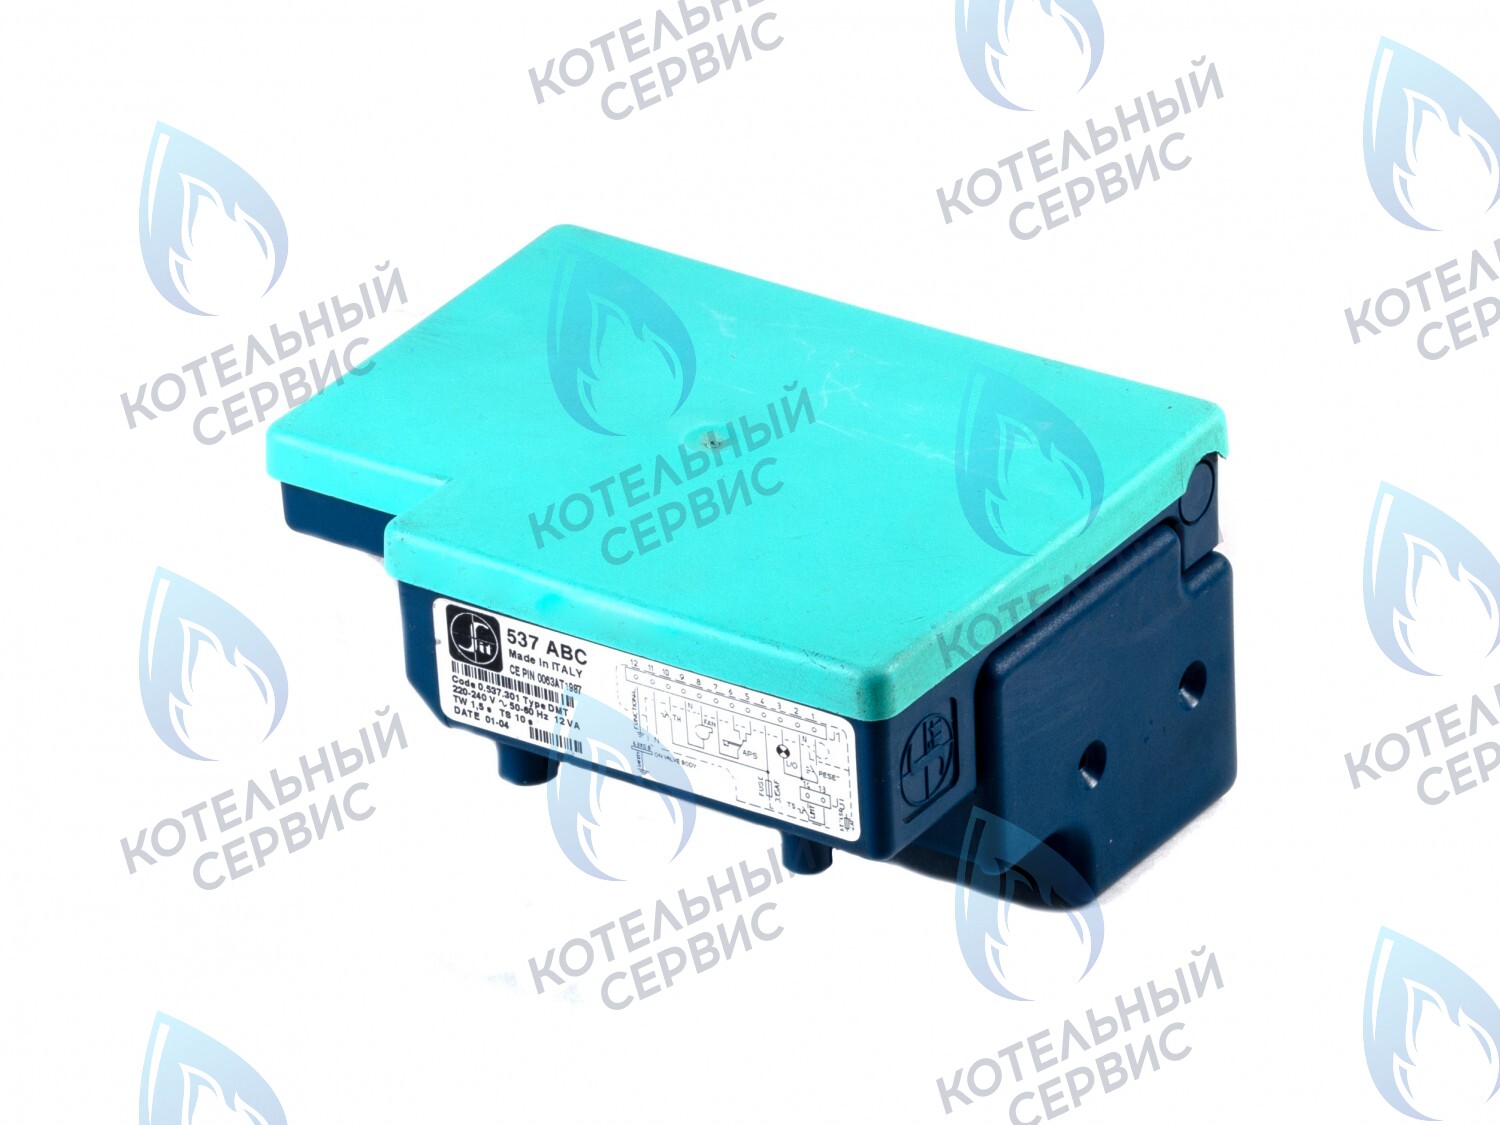 IB003 Электроника розжига (турбо) 537ABC PROTHERM (Блок розжига SIT-537ABC) (0020023214) в Барнауле